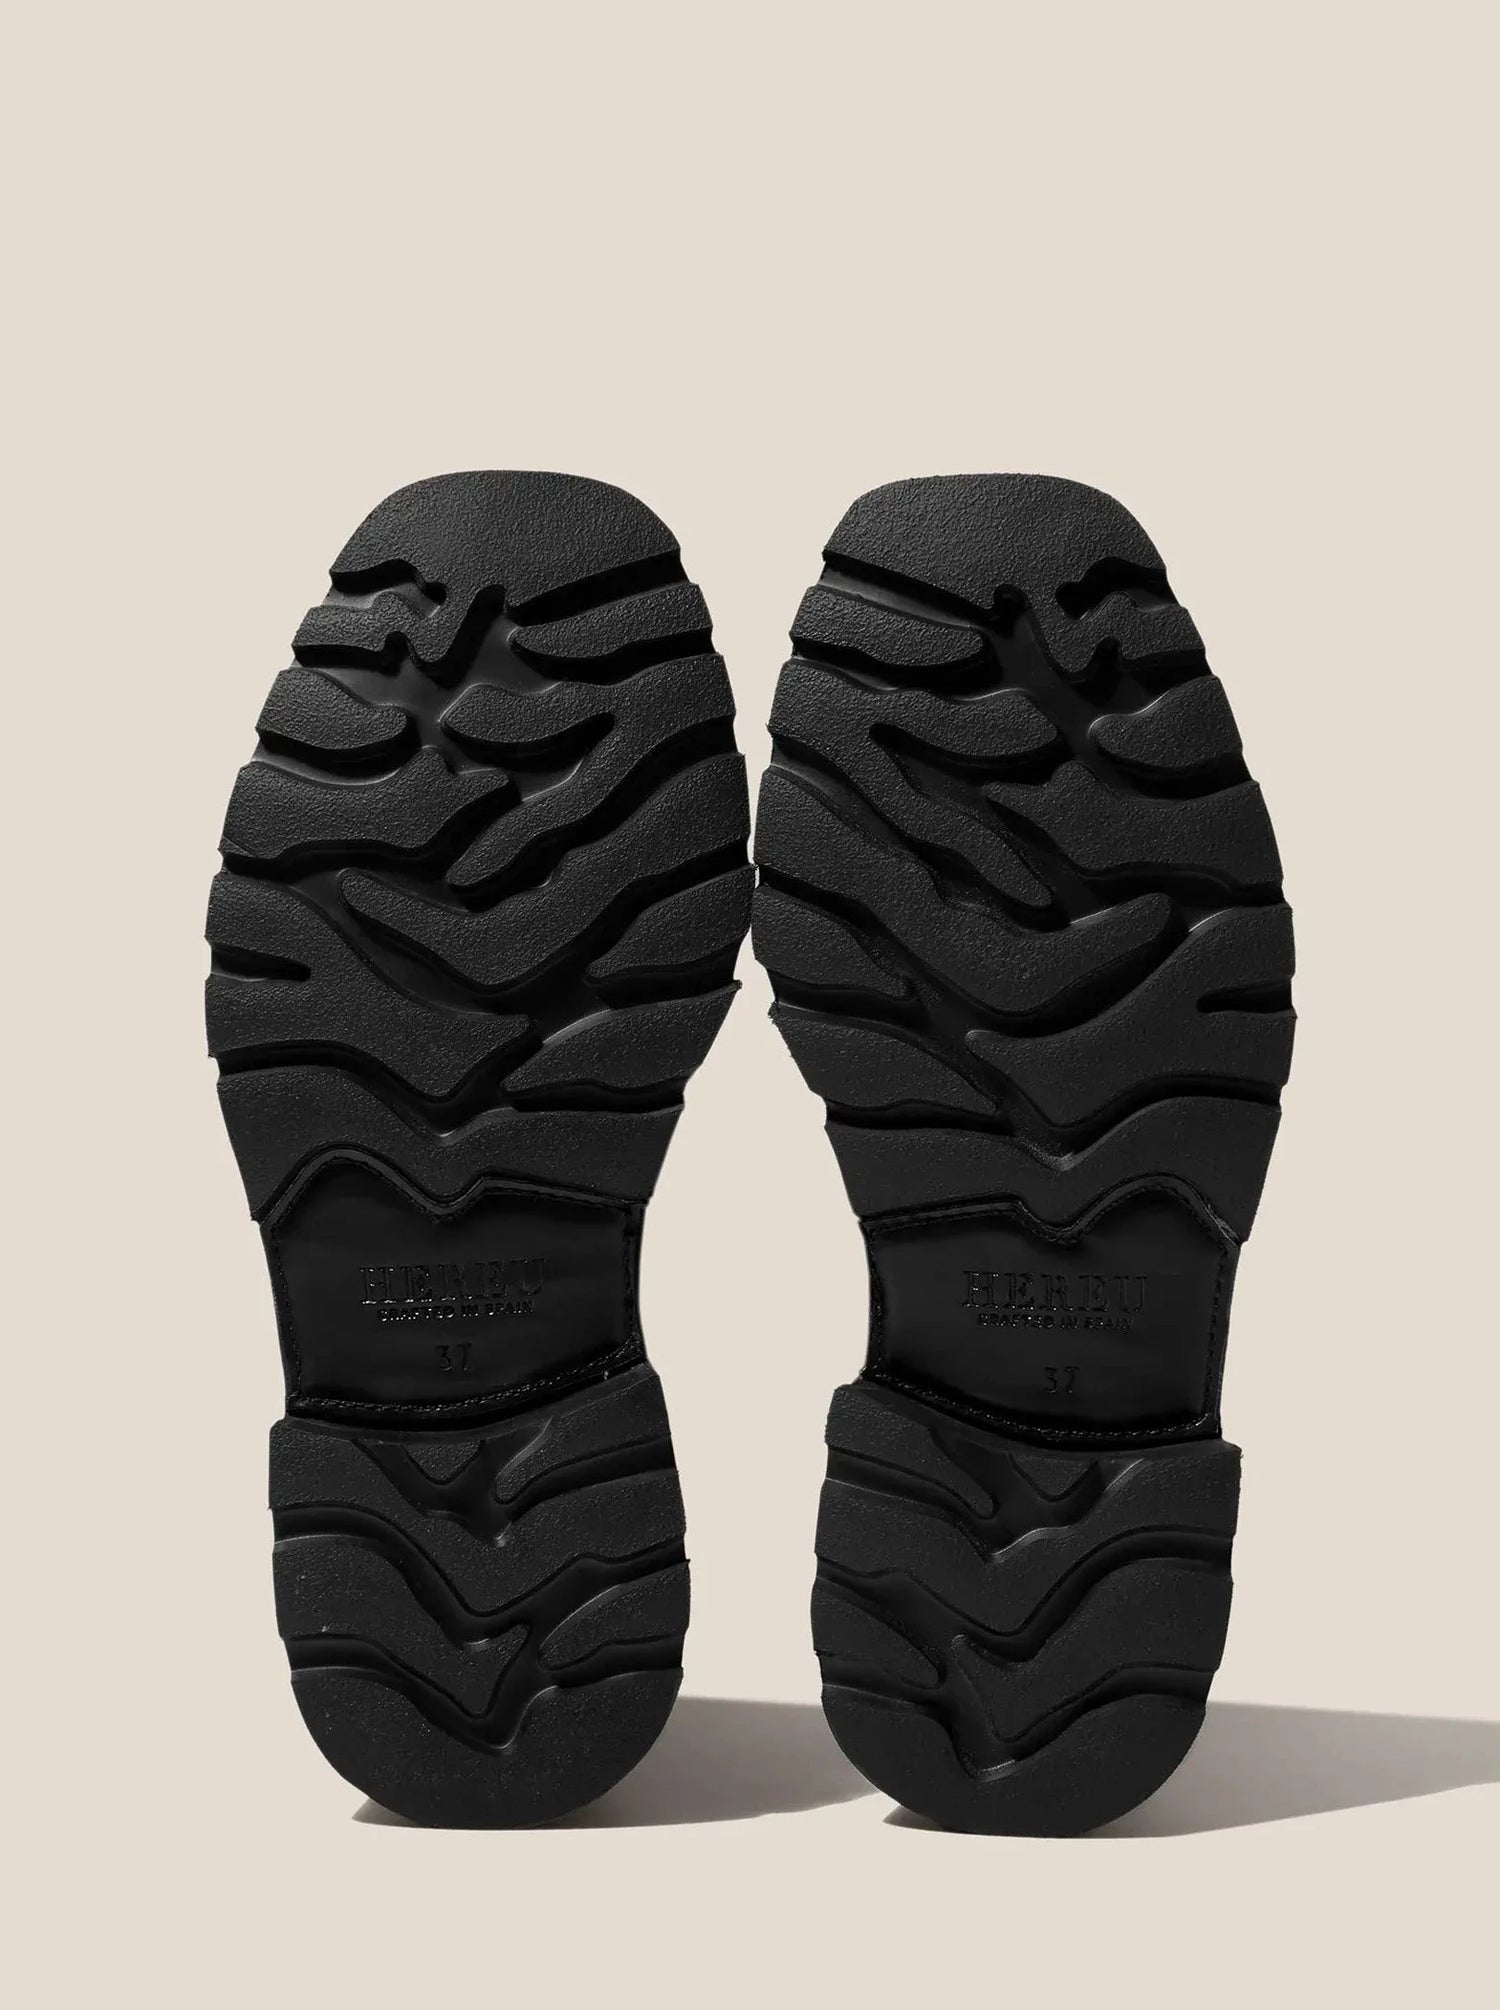 Alda Sport boots, black